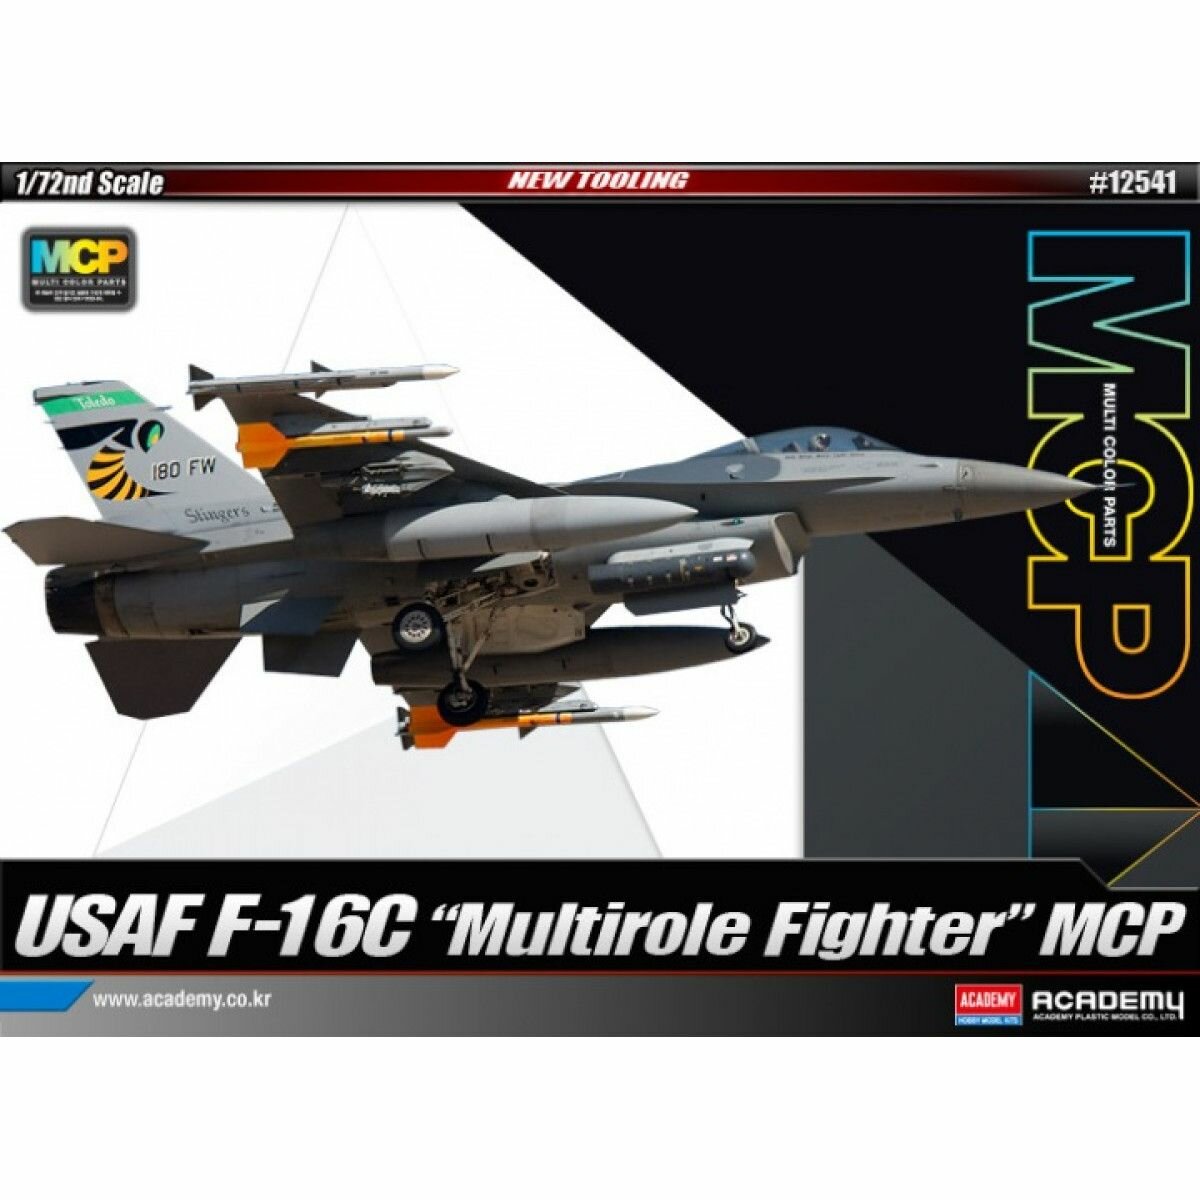 Academy сборная модель 12541 USAF F-16C "Multirole Fighter" 1:72